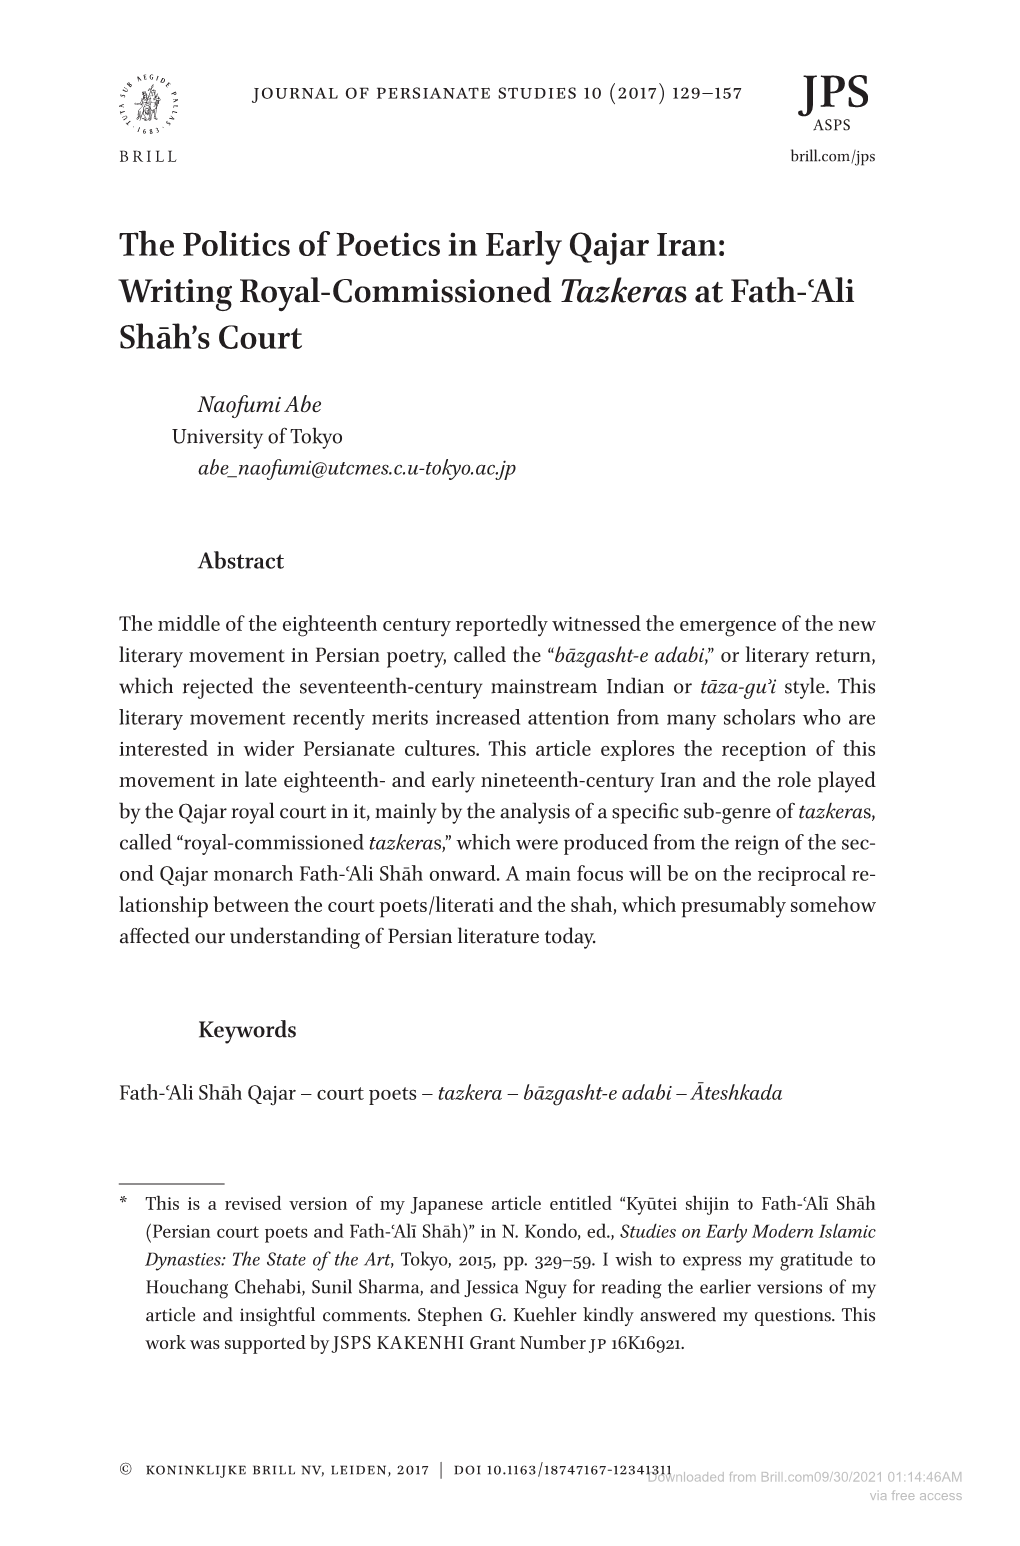 Writing Royal-Commissioned Tazkeras at Fath-ʿali Shāh's